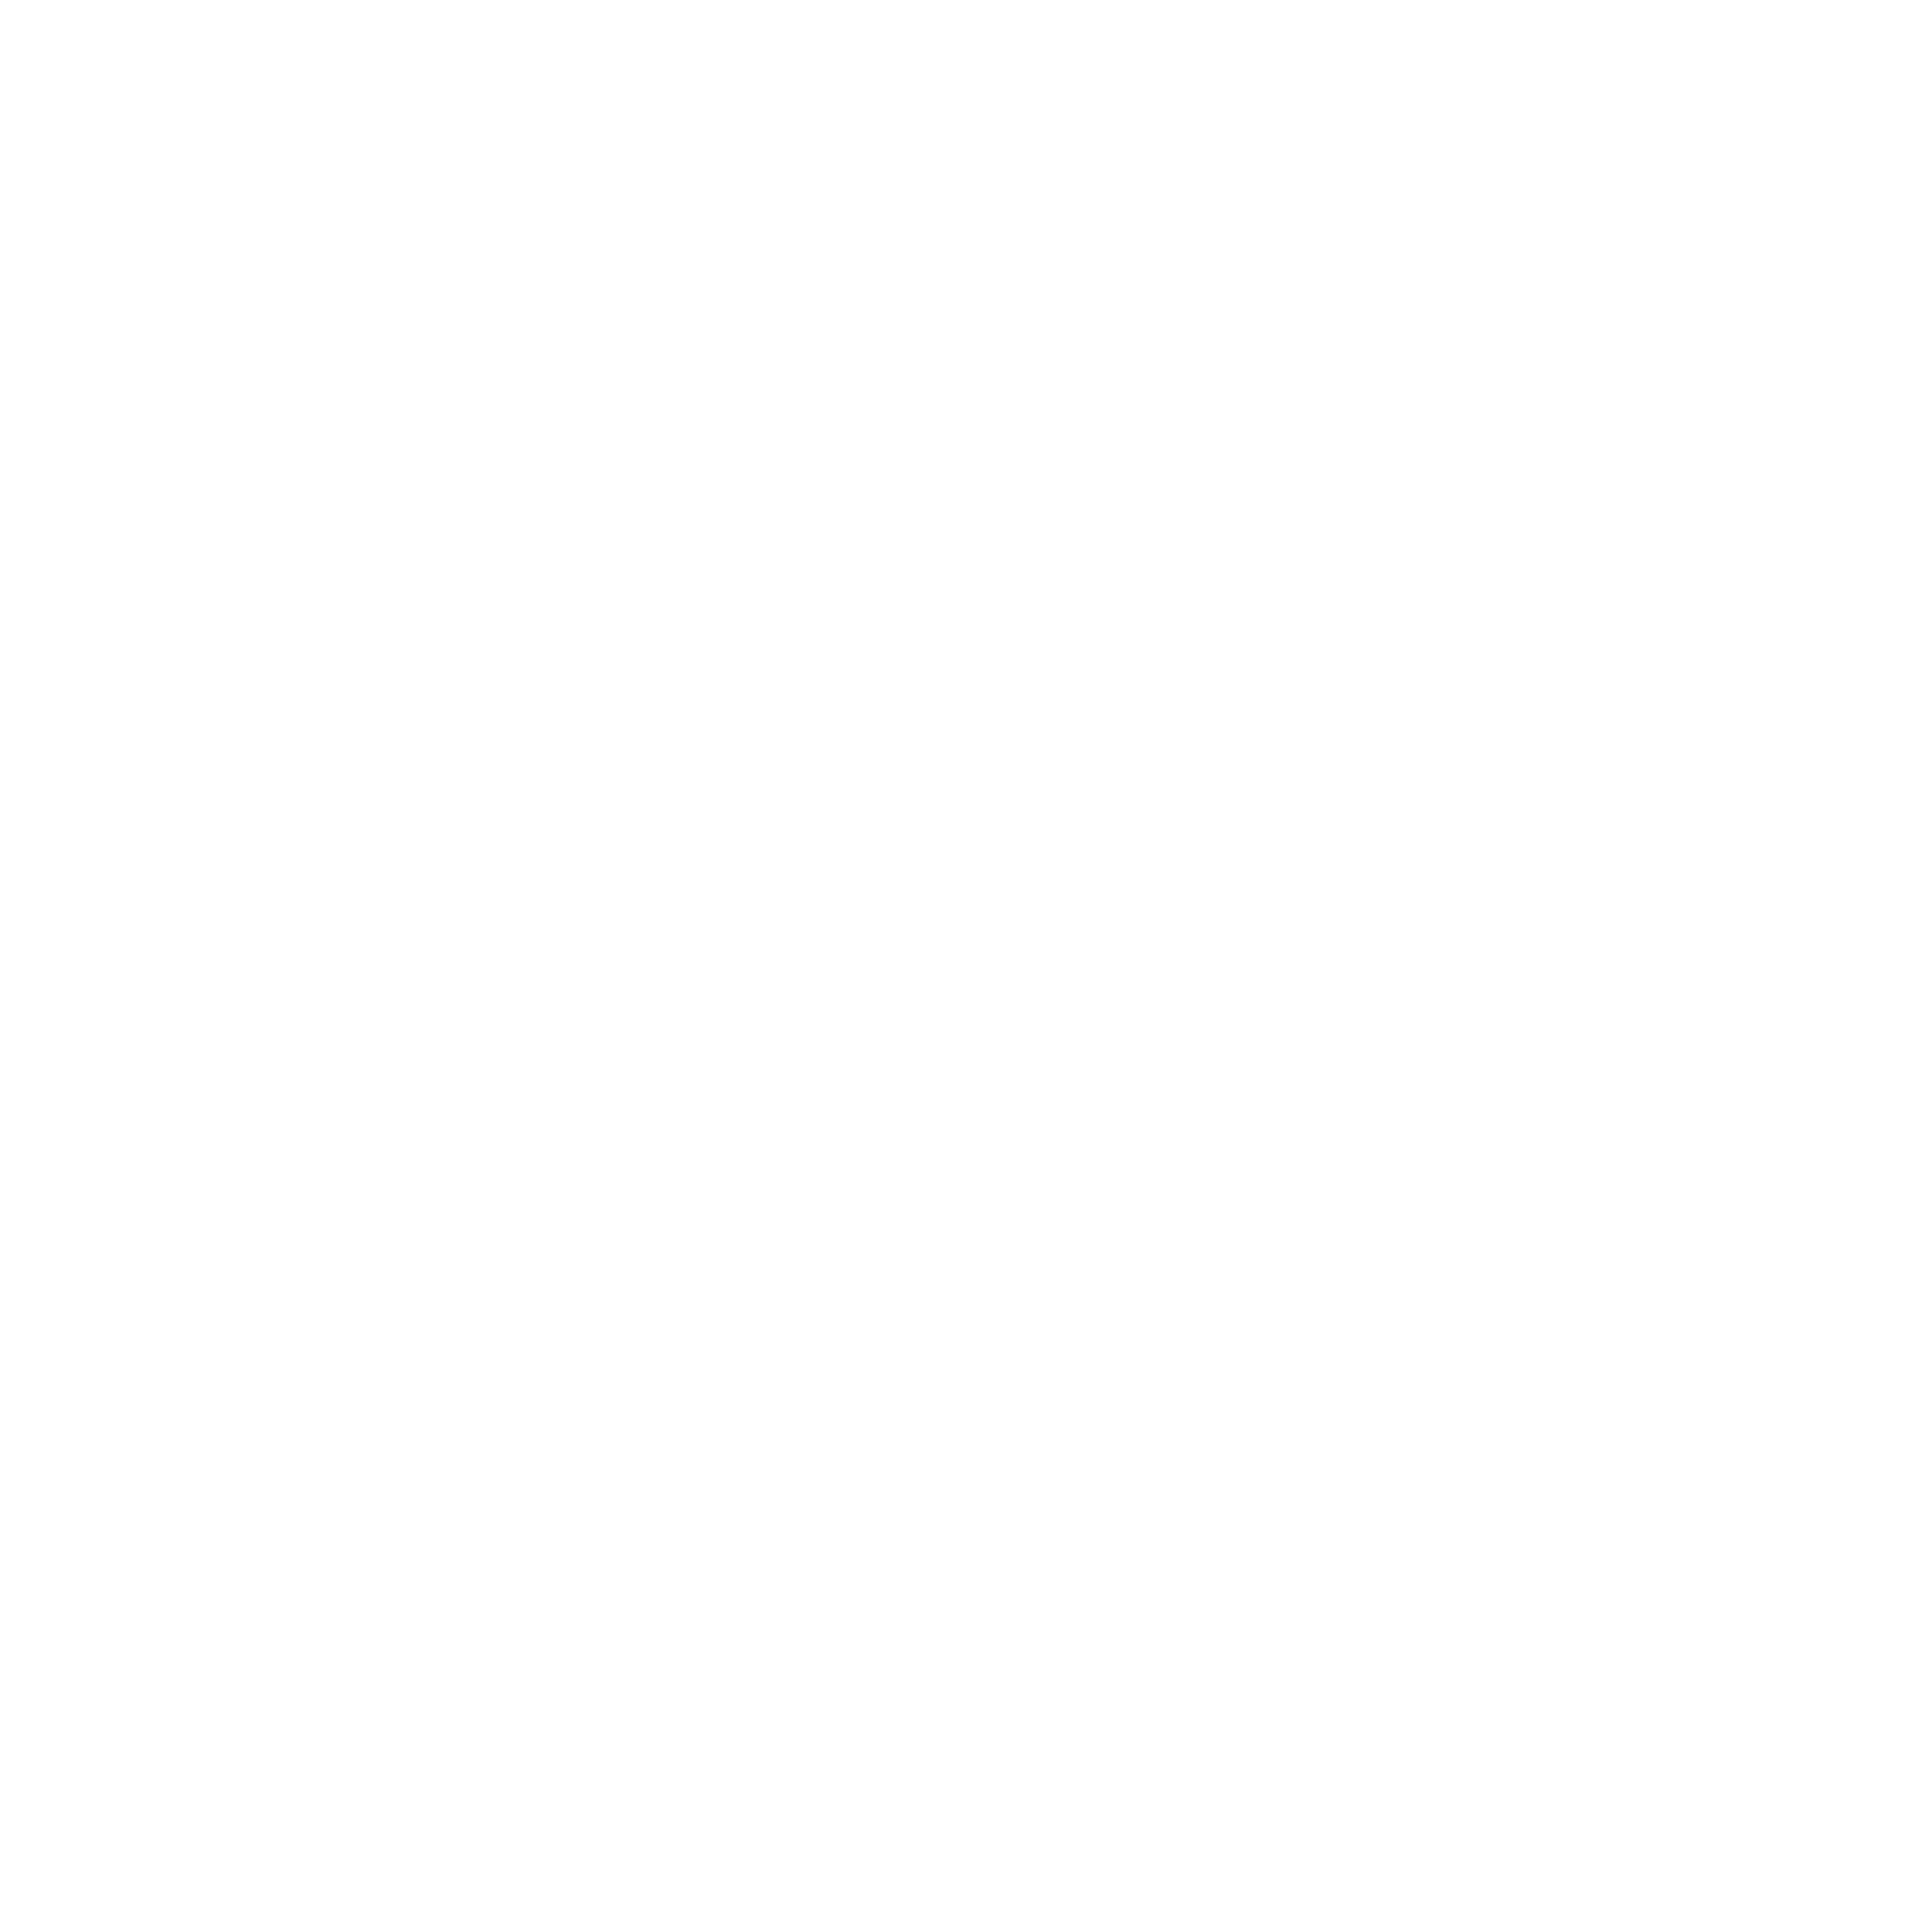 Sup West Amsterdam - Paddle board rental 